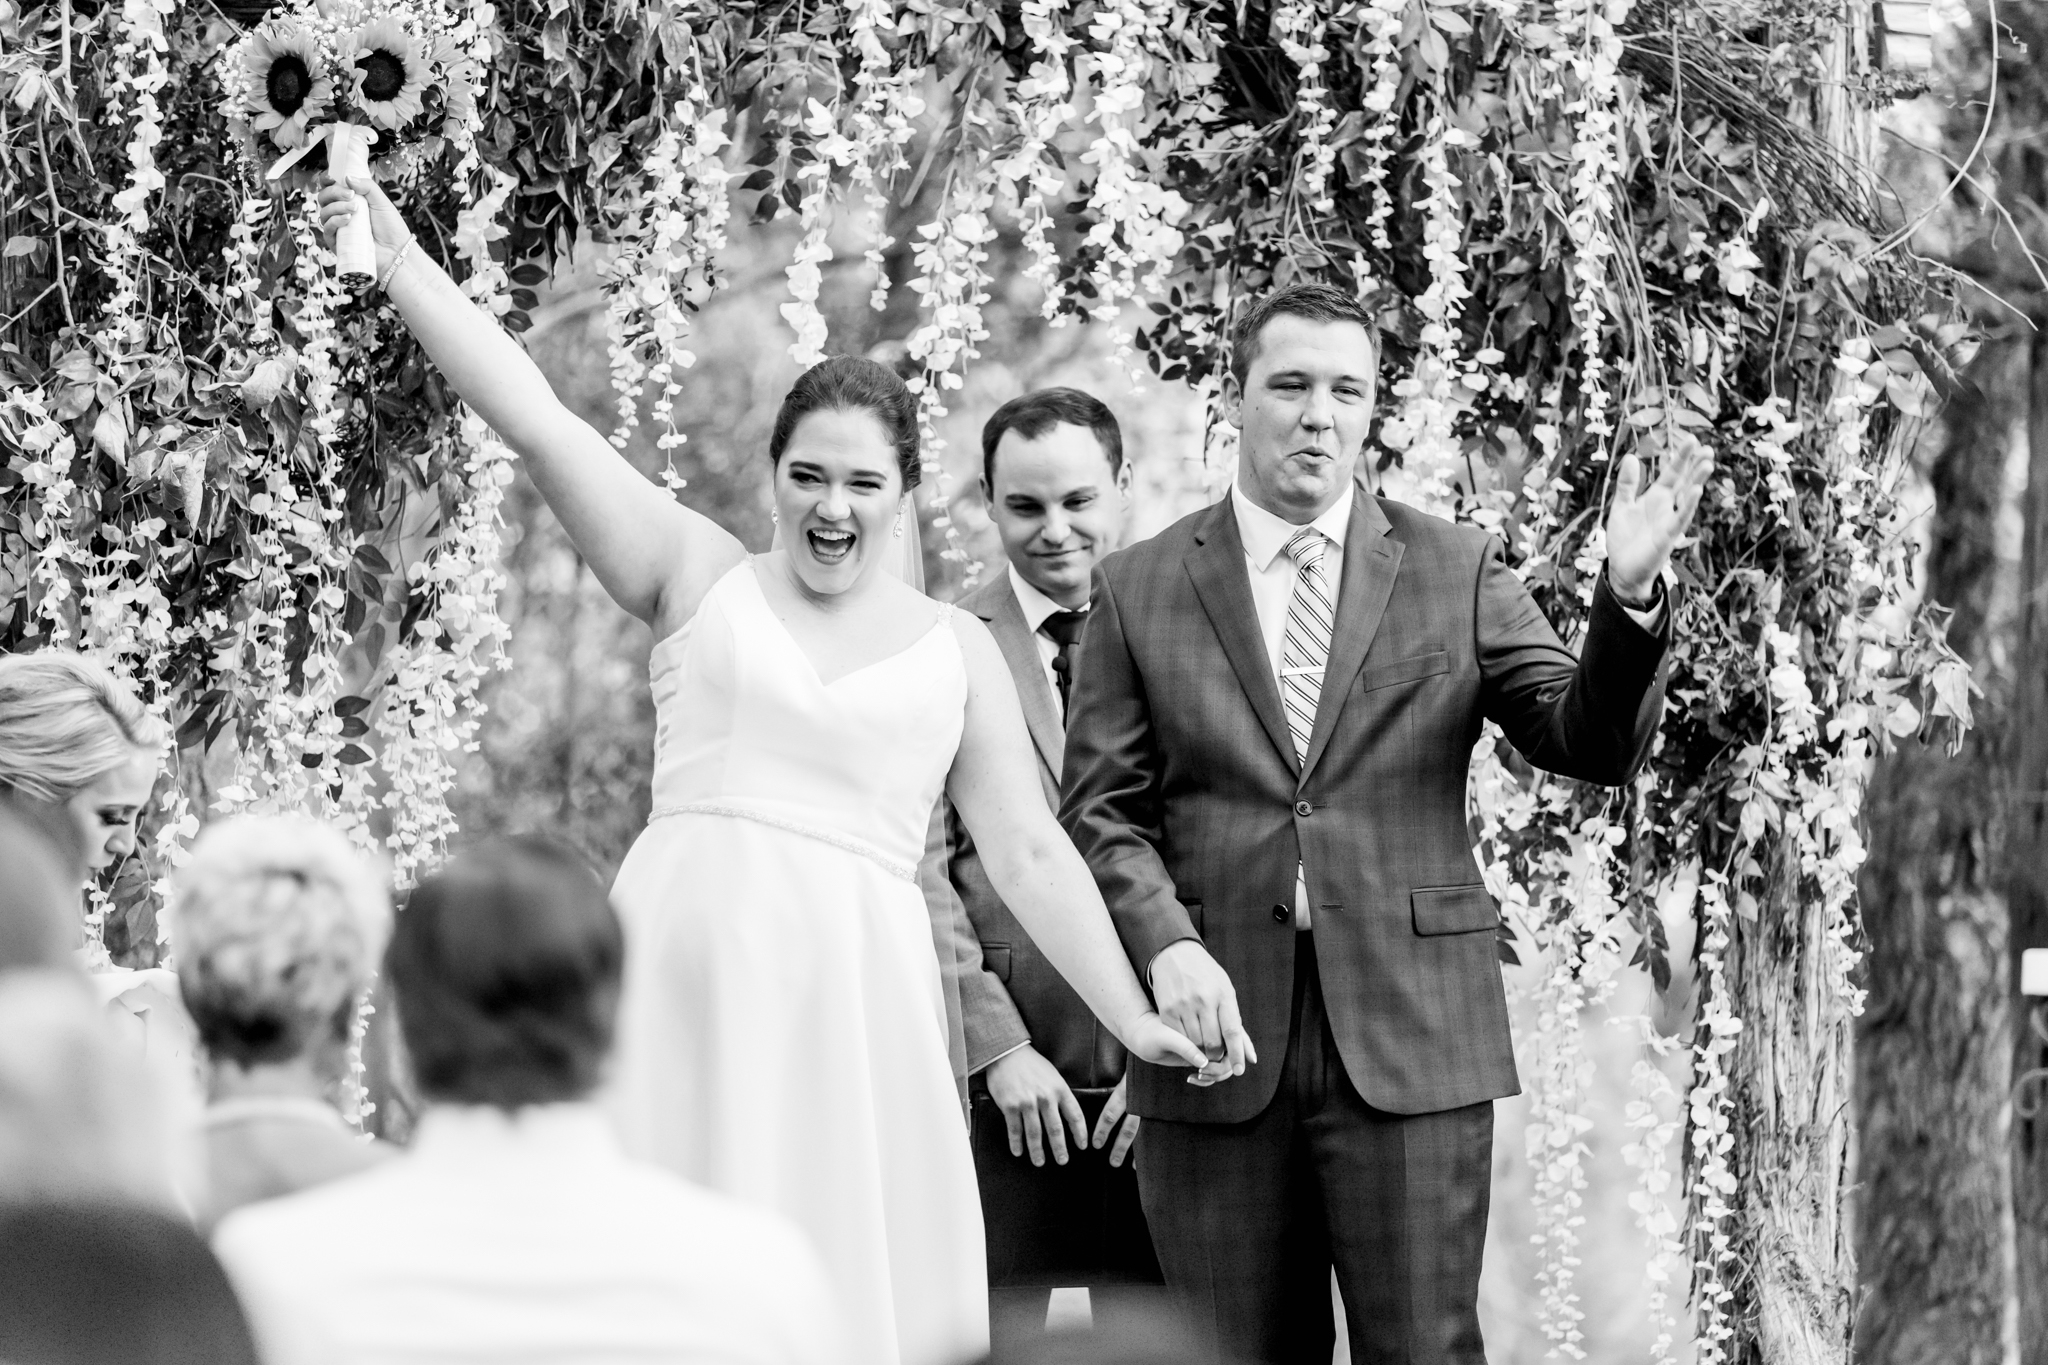 A Navy and Sunflower Filled Wedding at La Fontana Springs in San Antonio, TX by Dawn Elizabeth Studios, San Antonio Wedding Photographer